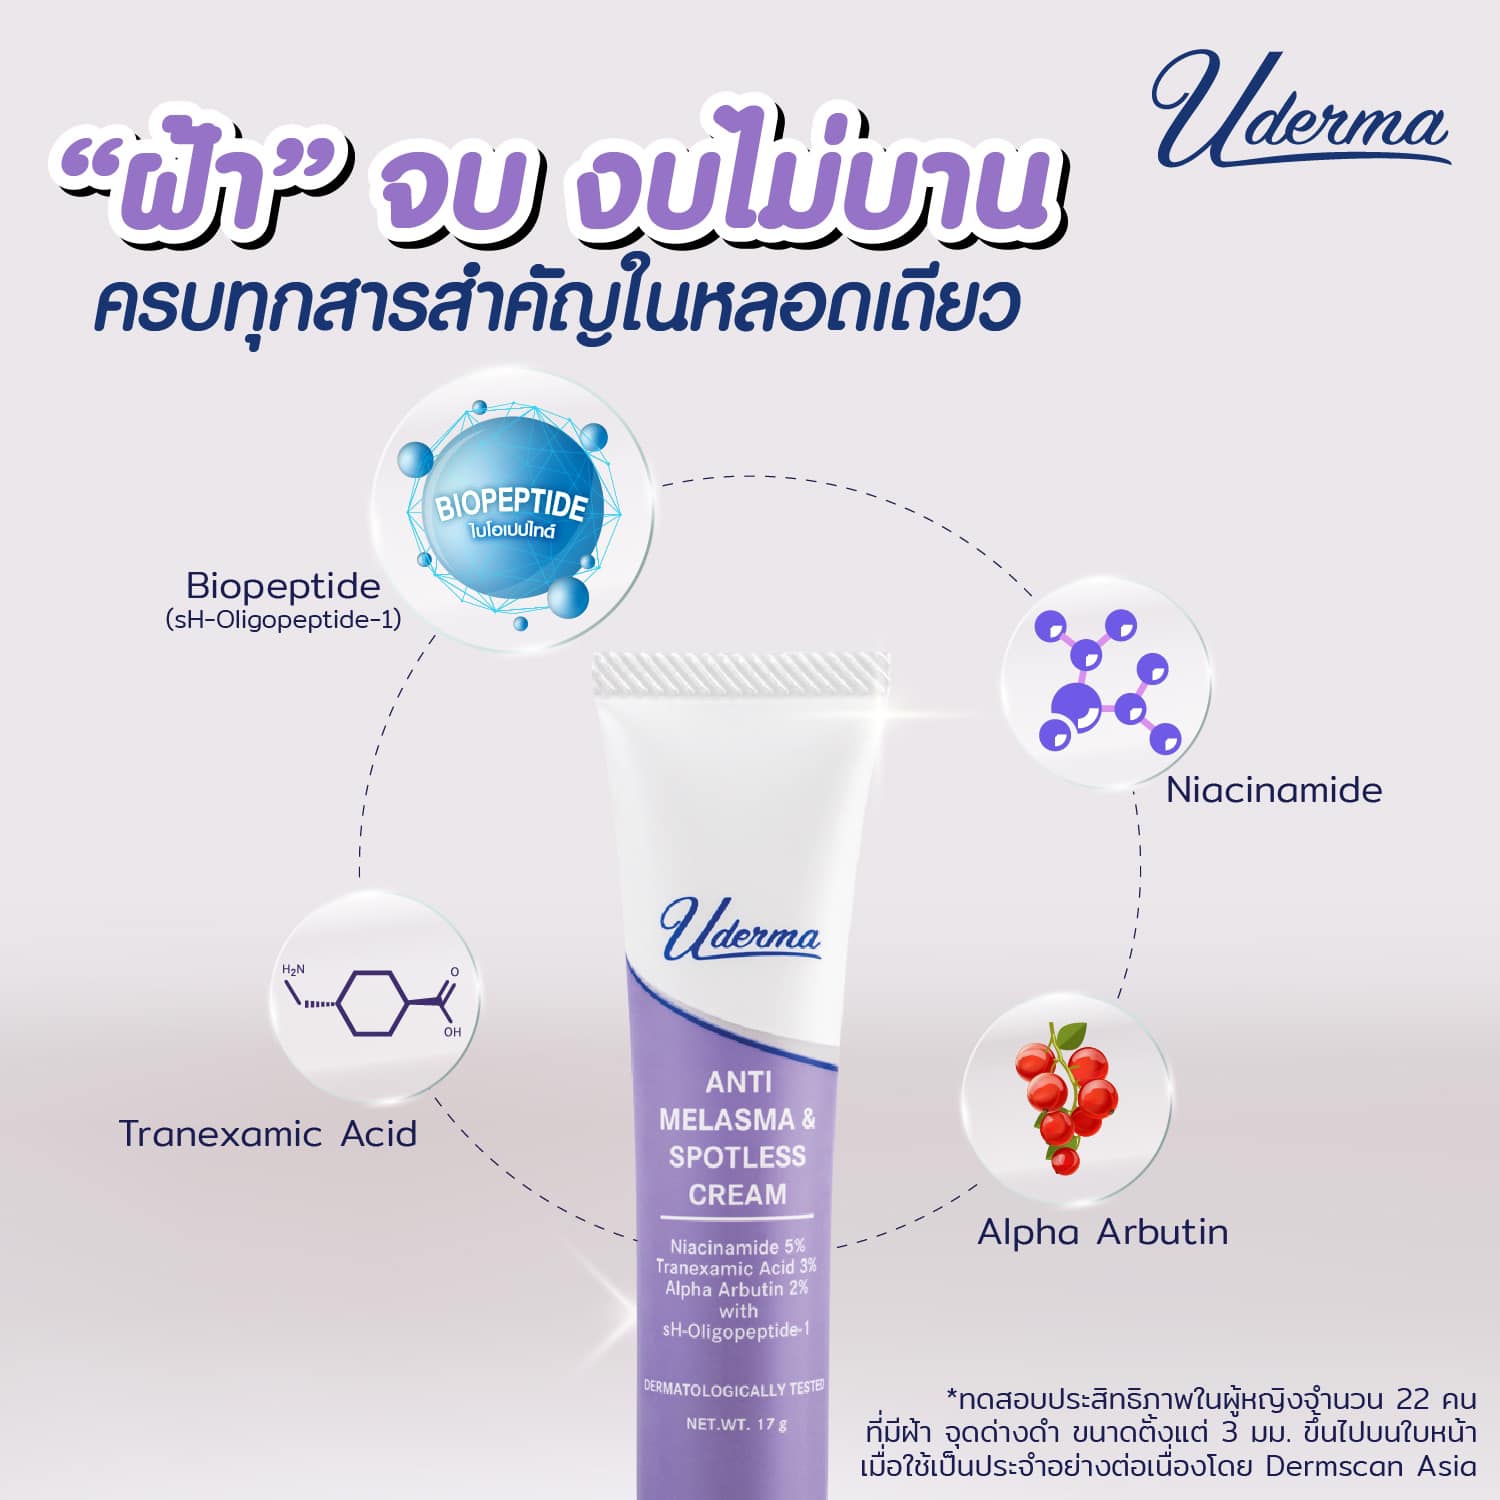 Uderma Anti-Melasma & Spotless Cream 5g. (ไซส์ขนาดทดลอง) นวัตกรรมที่รวบรวมครบทุกสารสำคัญที่แพทย์ผิวหนังแนะนำ ให้คุณได้เคลียร์ฝ้าอย่างปลอดภัย จบทุกขั้นตอน